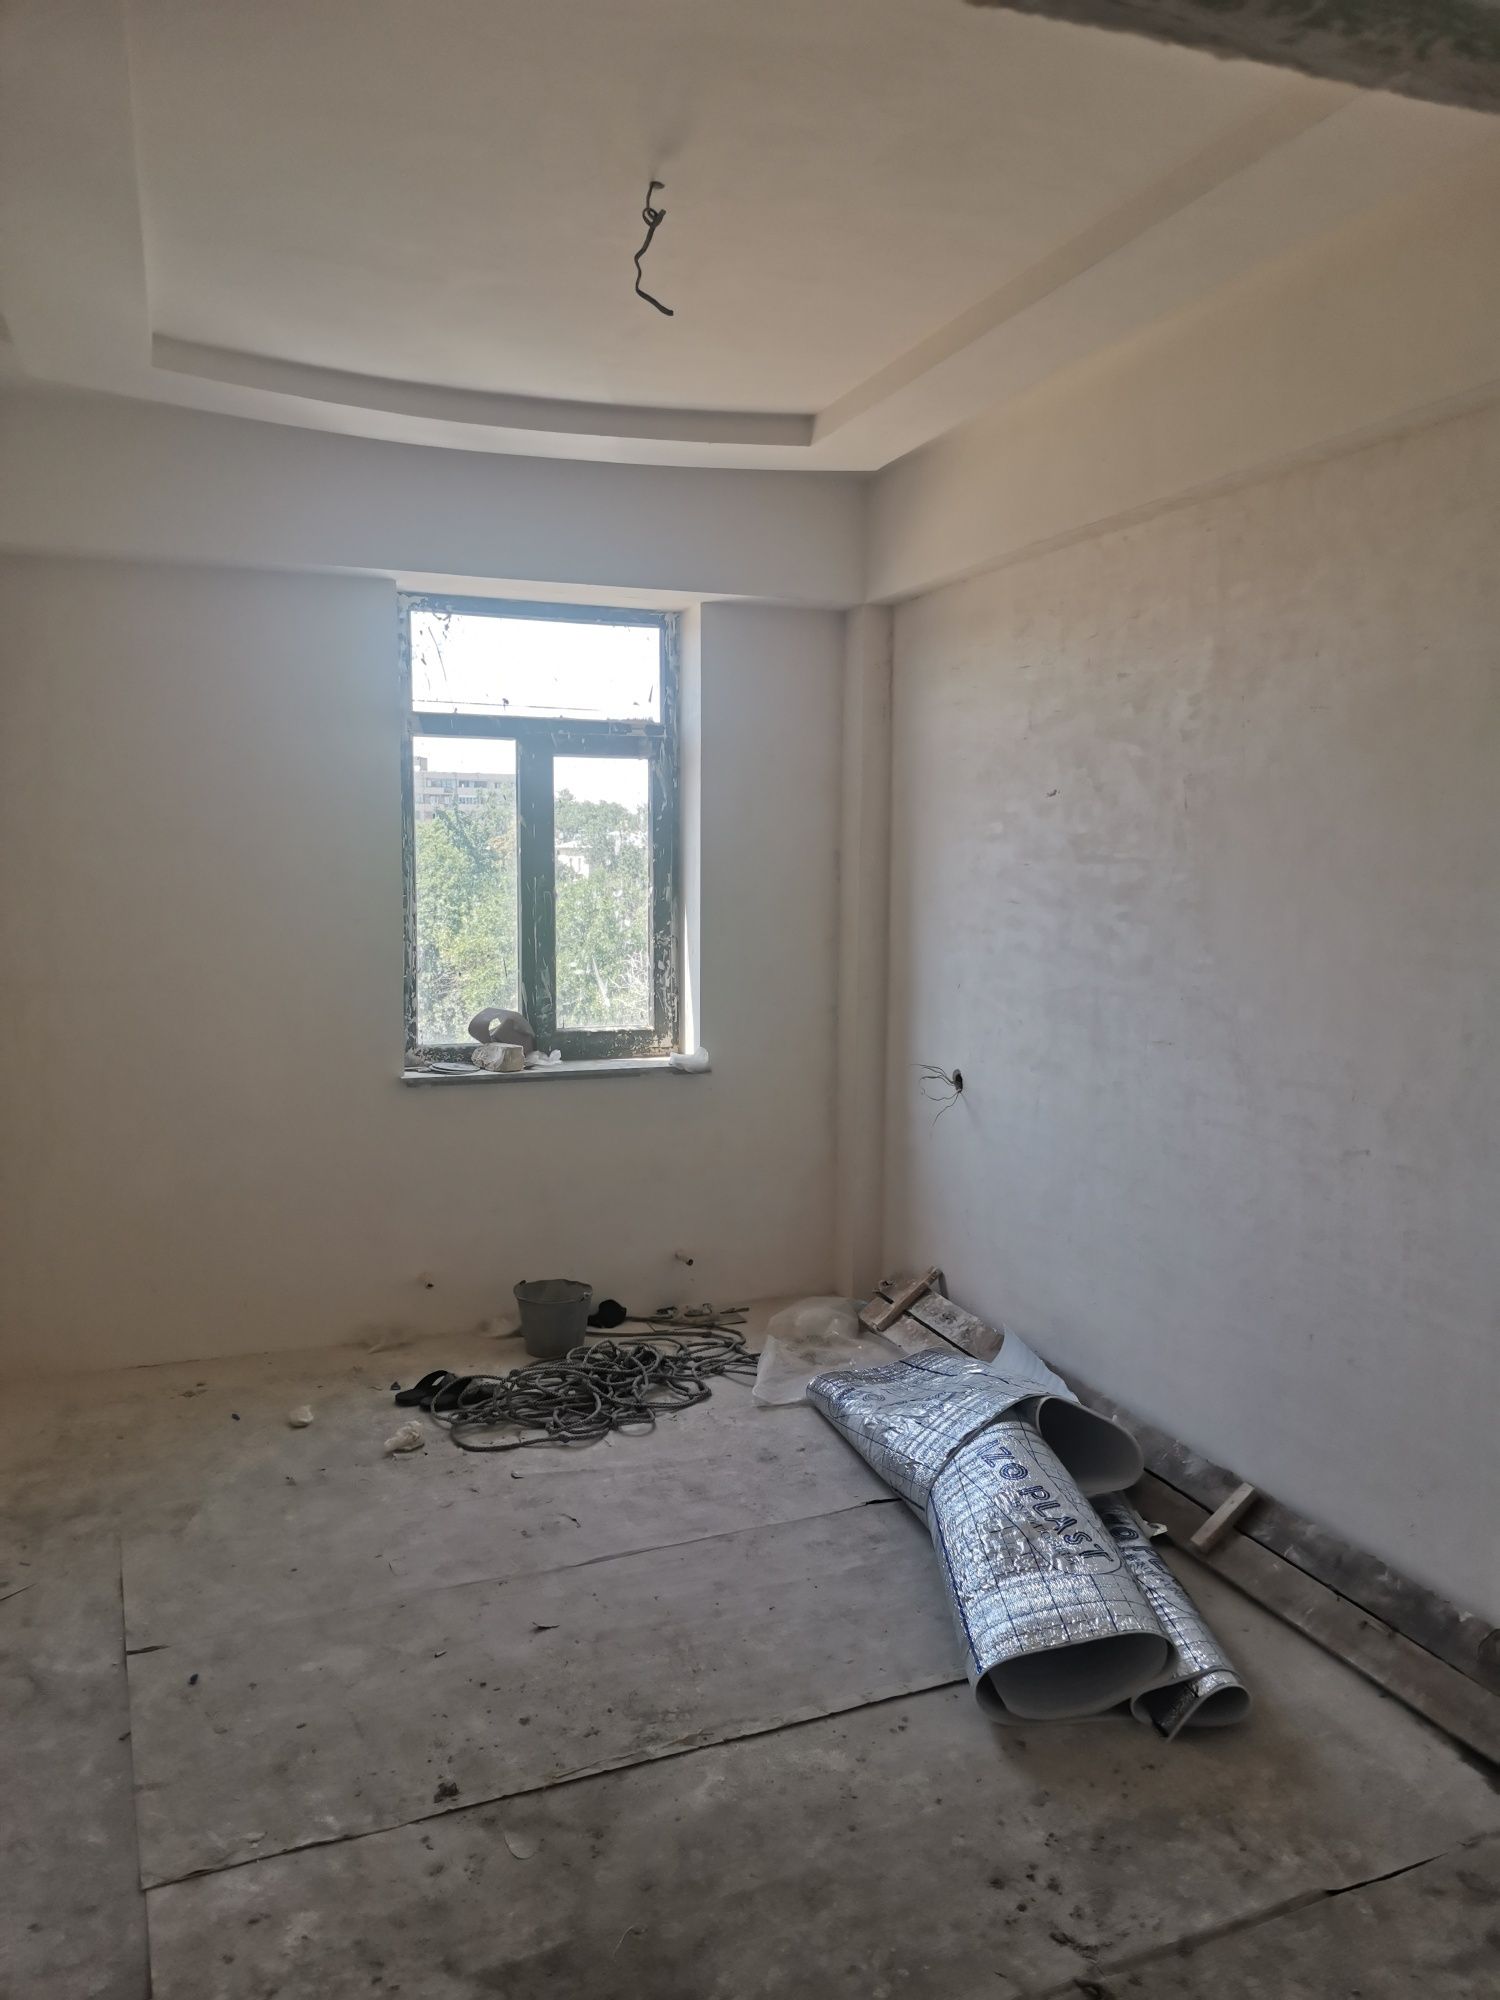 Фархадский бозор йонида 6 этаж кирпичний дом ново стройка 44 кв метир